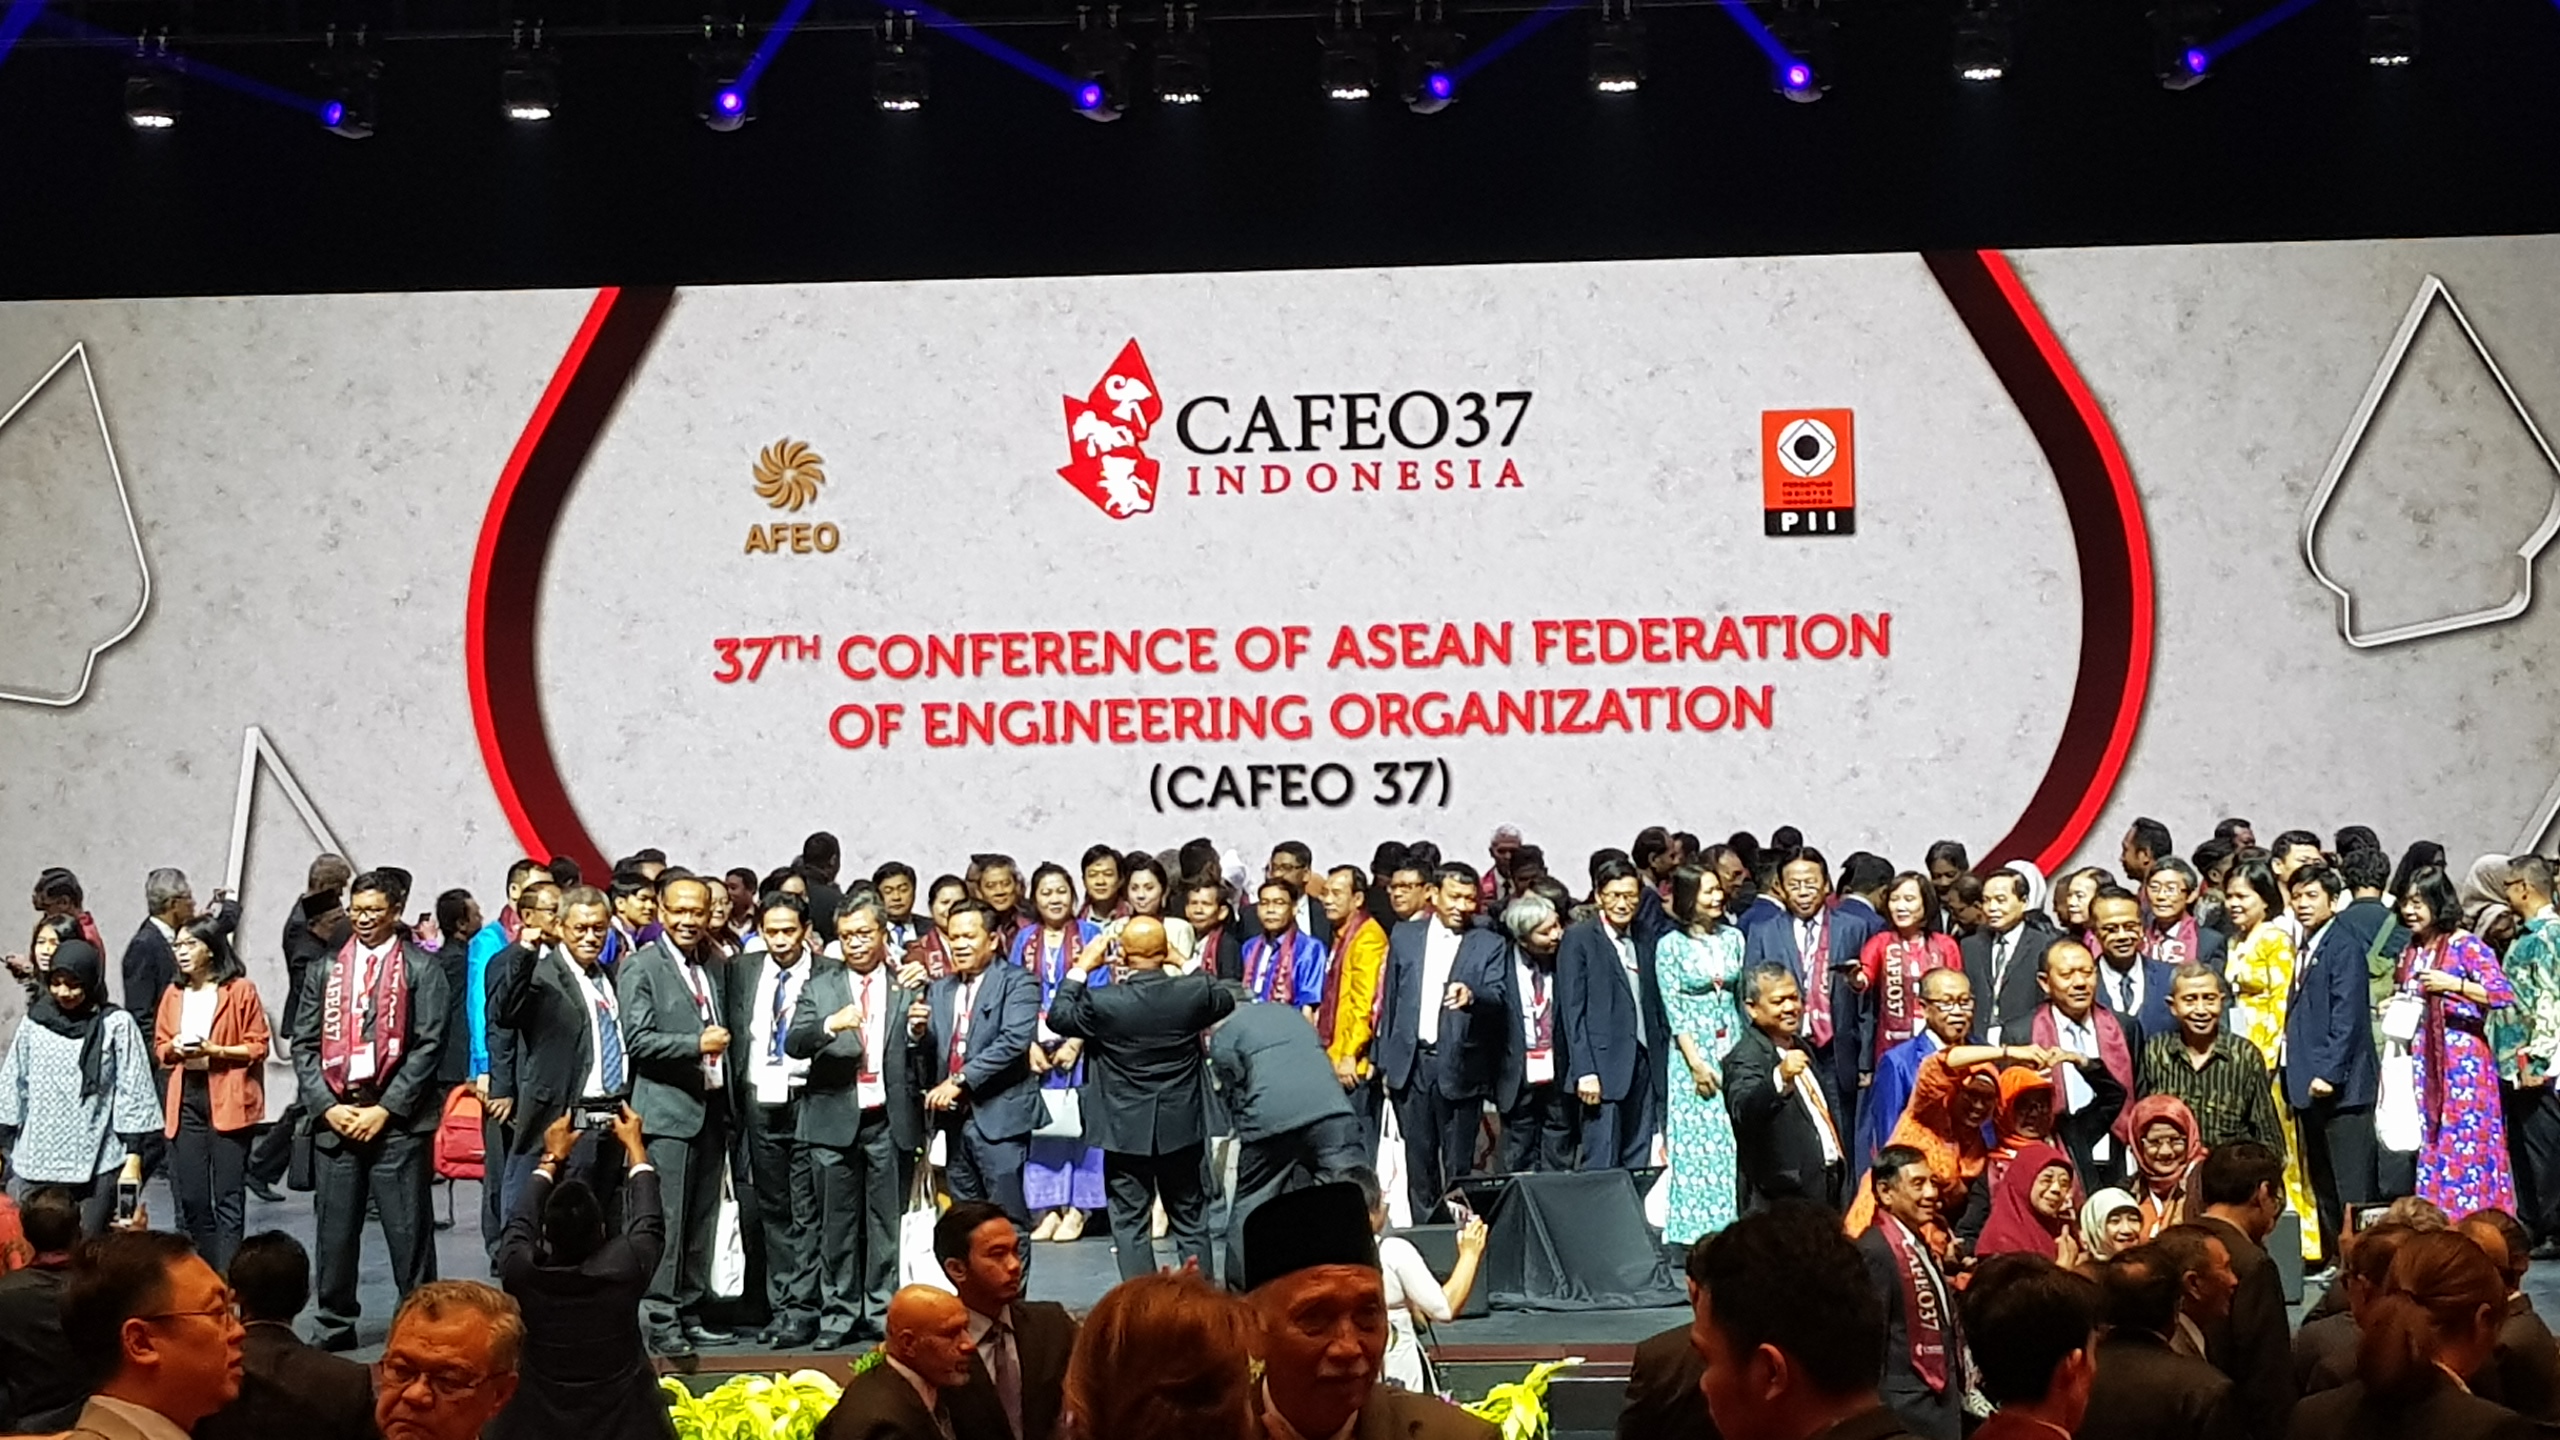 EKA President joins CAFEO37 Indonesia